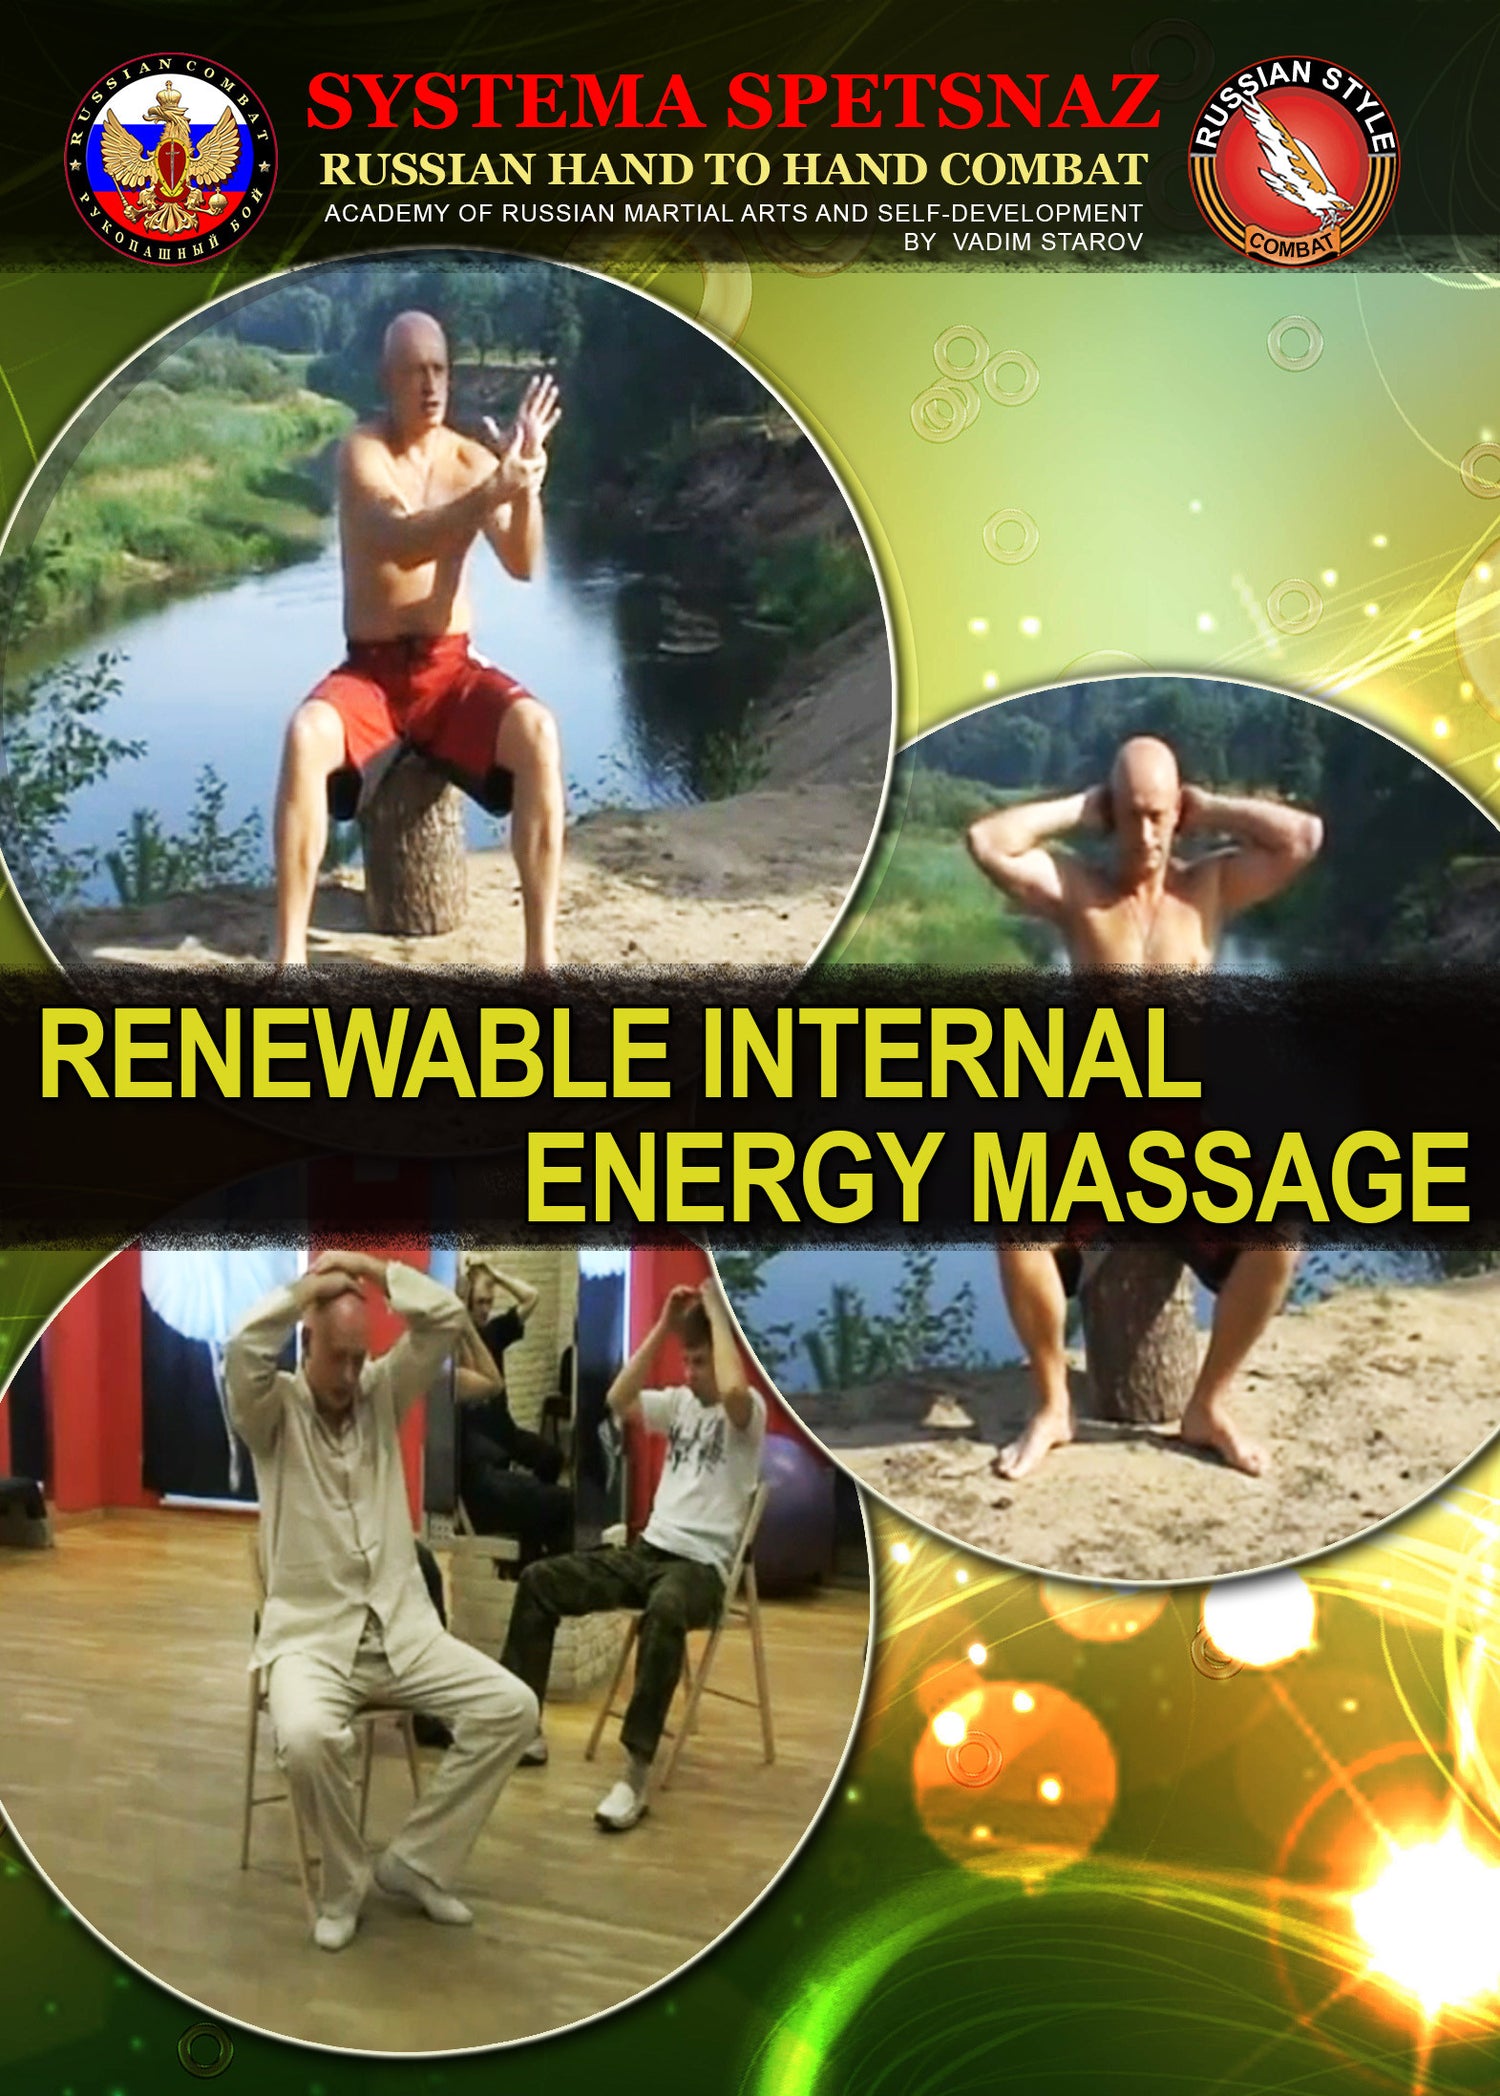 Systema Spetsnaz DVD #13: Self-Development - Renewable Internal Energy Massage - Budovideos Inc